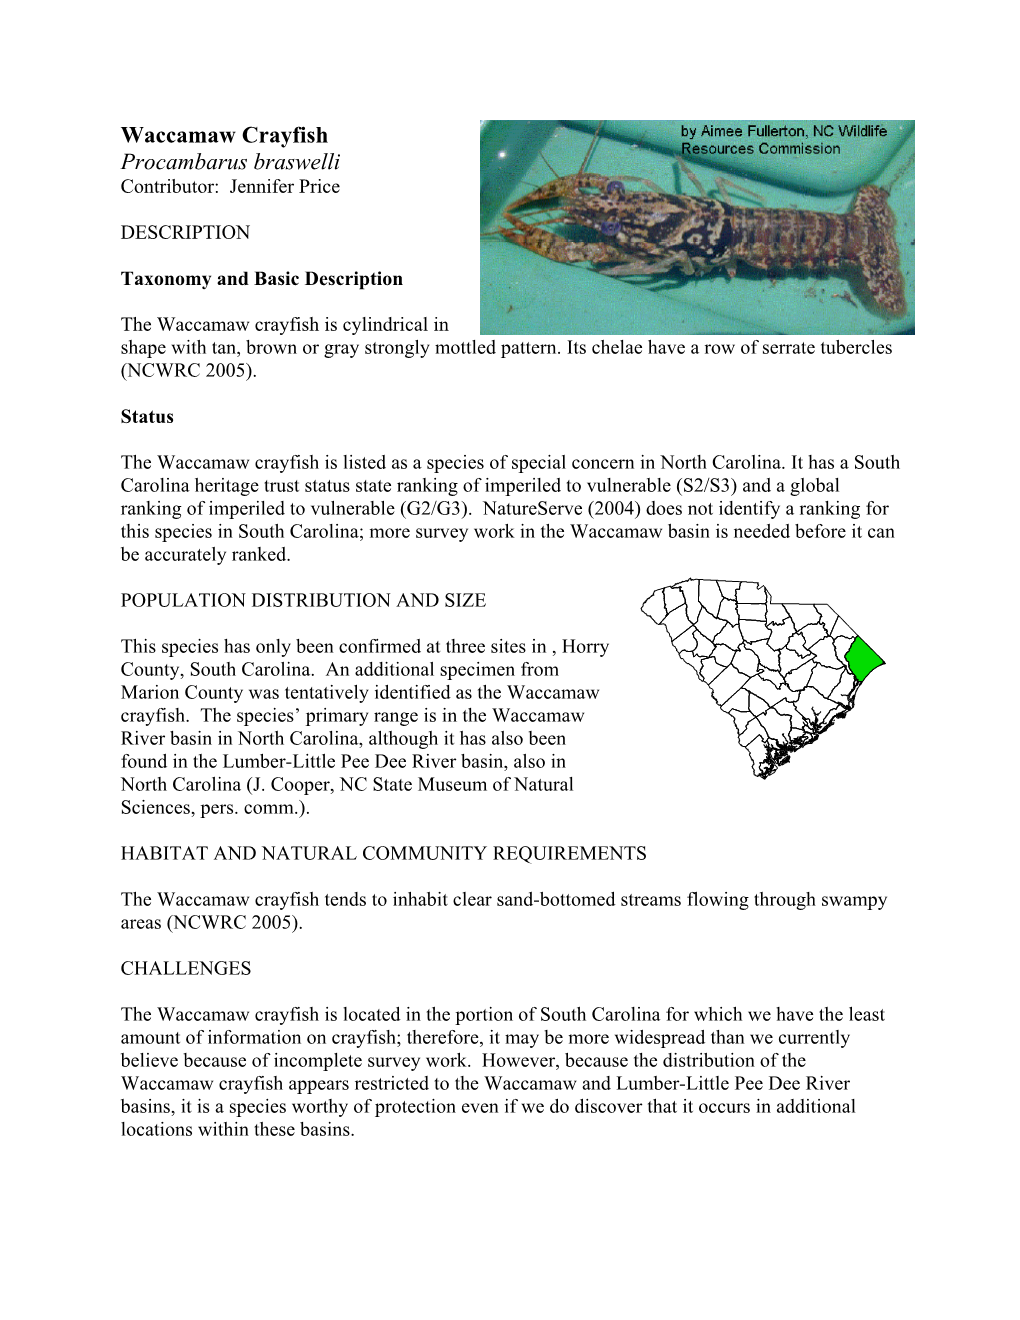 Waccamaw Crayfish Procambarus Braswelli Contributor: Jennifer Price